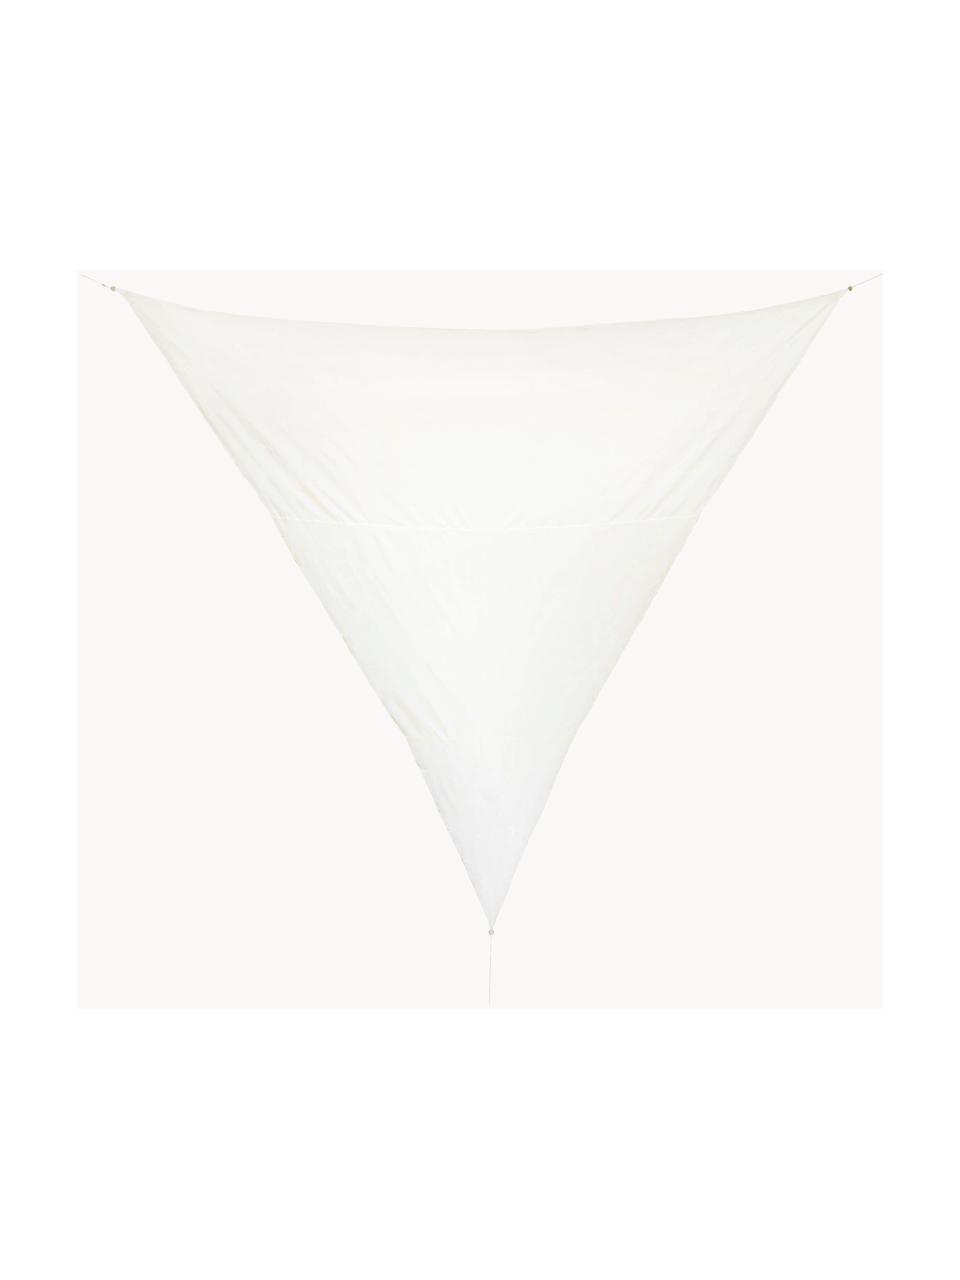 Tenda a vela Triangle, Bianco crema, Larg. 360 x Lung. 360 cm